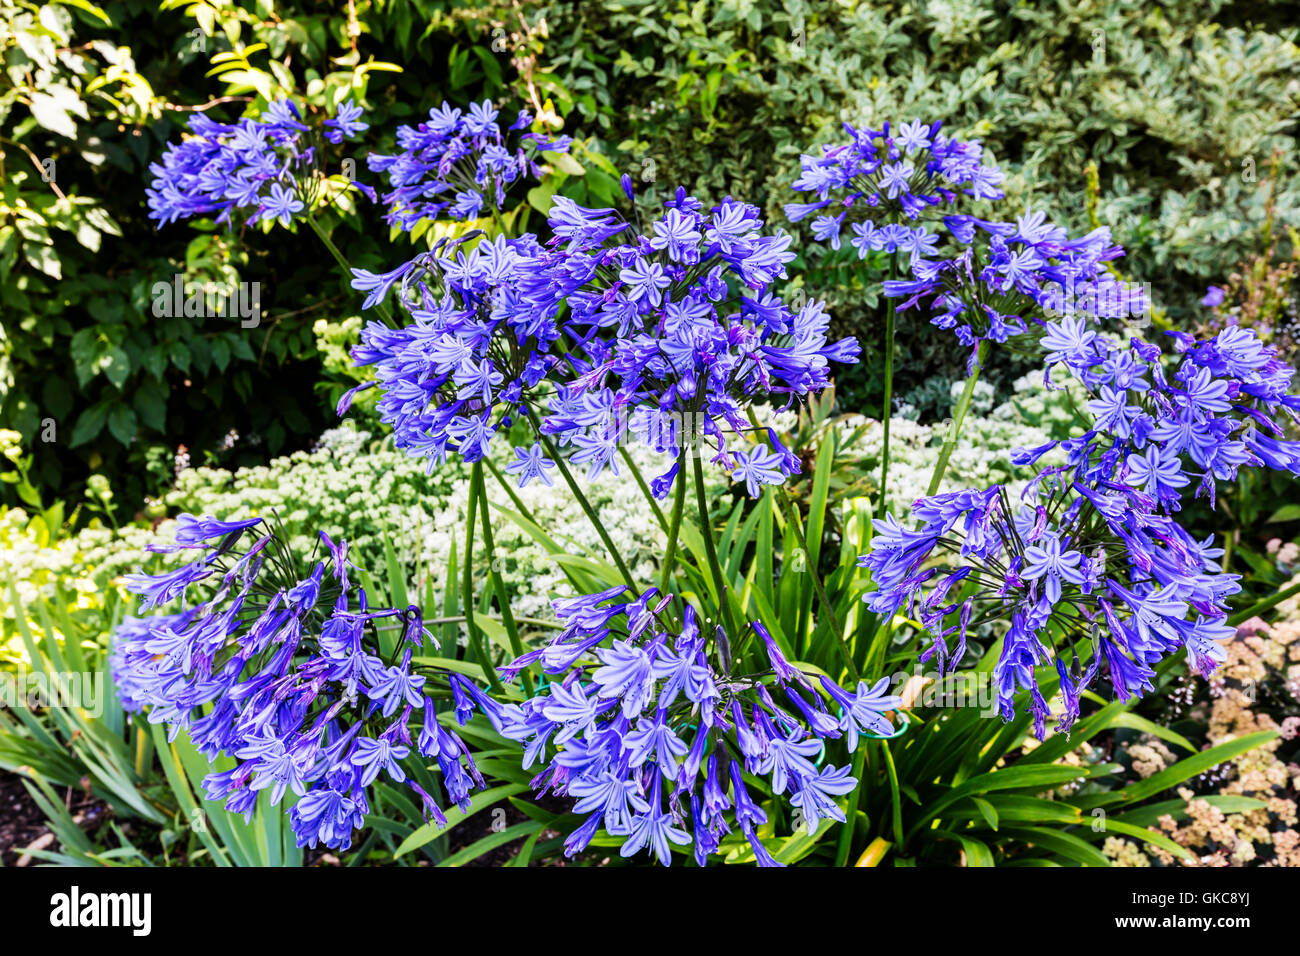 Blue Agapanthus flowering plant in summer garden. Stock Photo